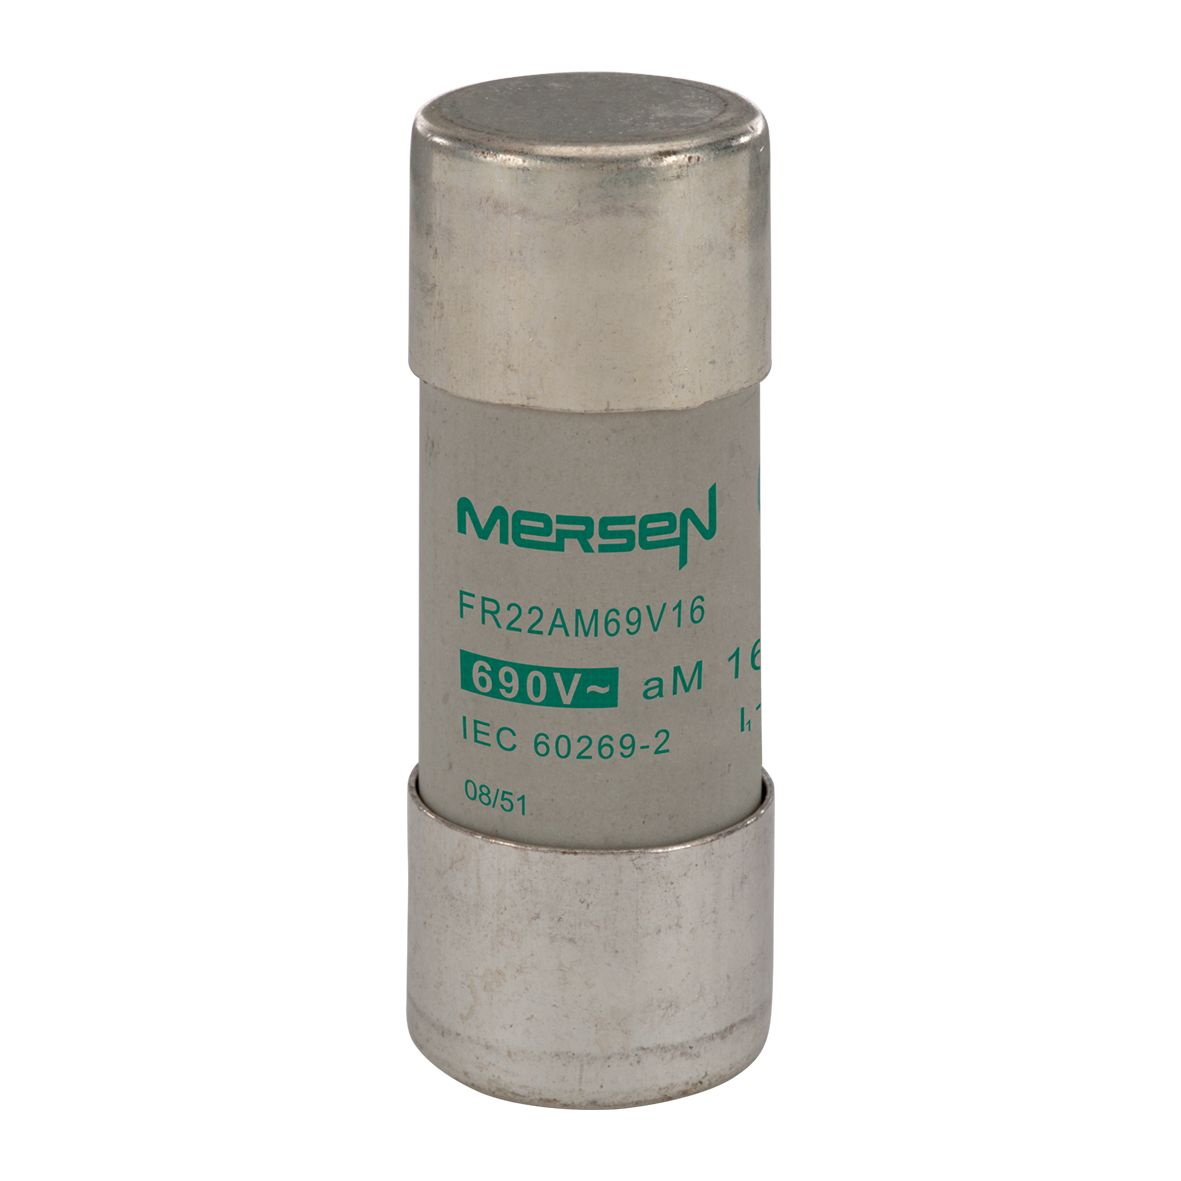 M211565 - Cylindrical fuse-link aM 690VAC 22.2x58, 16A